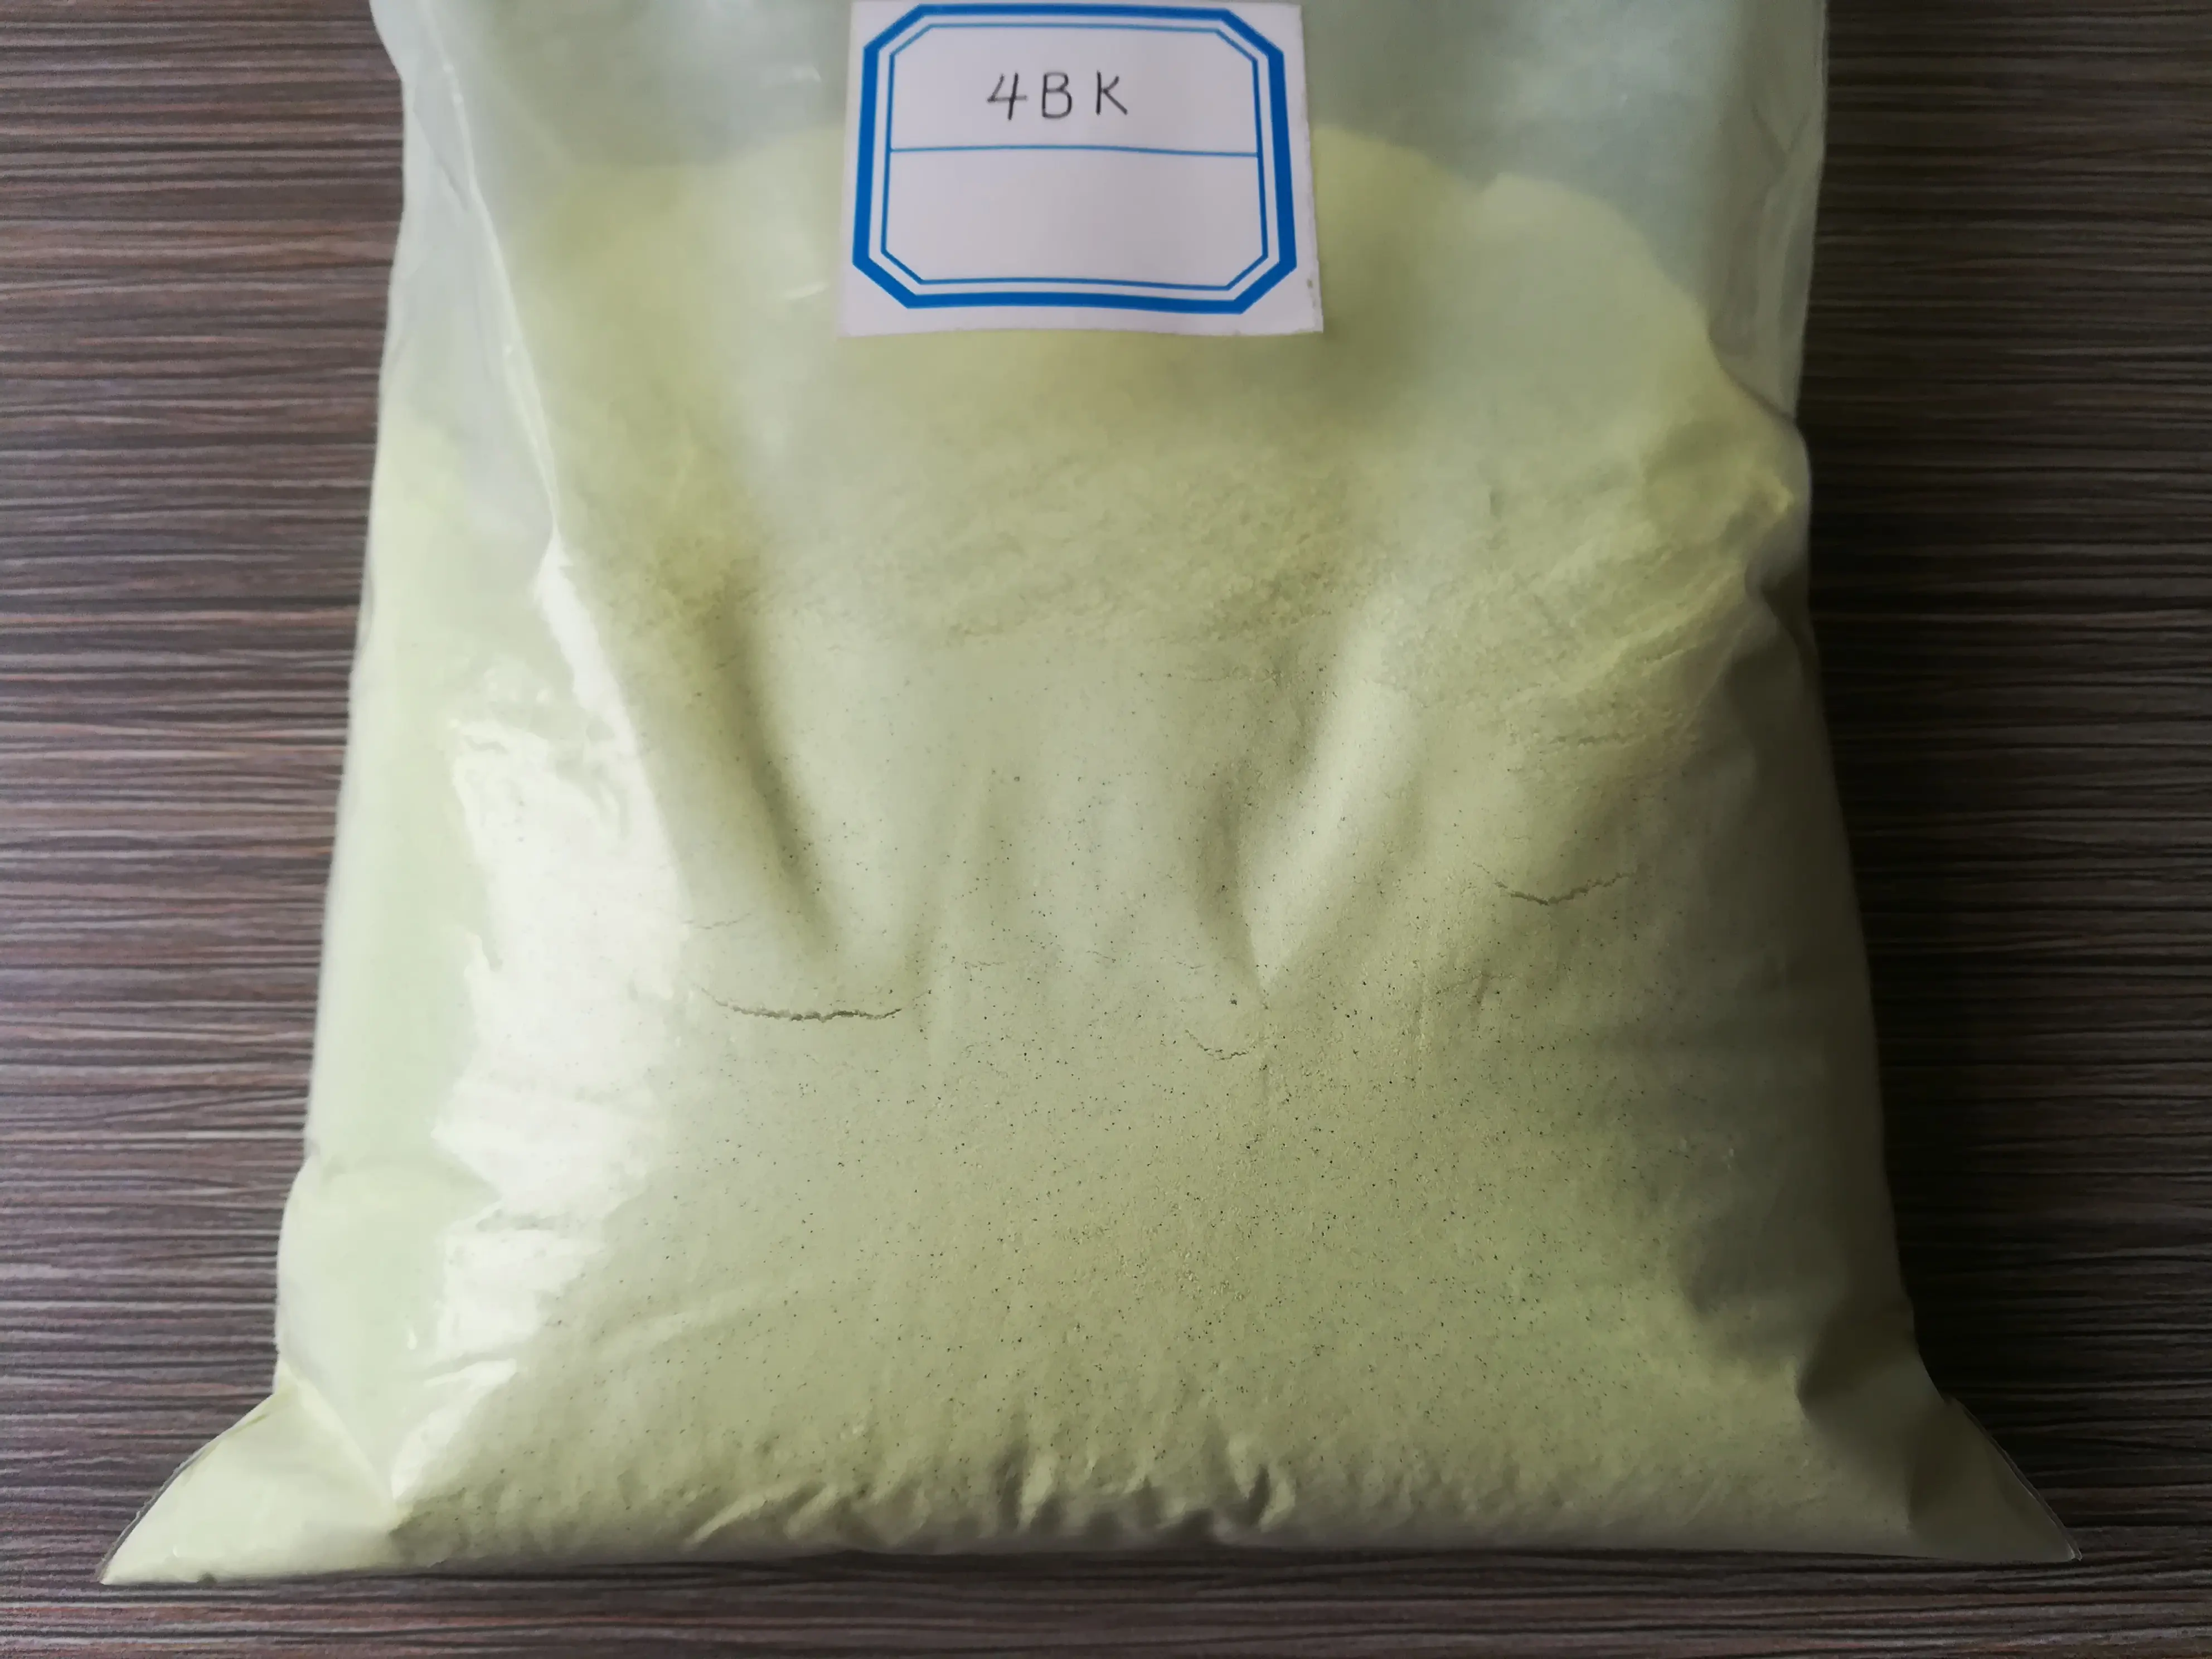 Application of Fluorescent Whitening Agent 4BK on Cotton